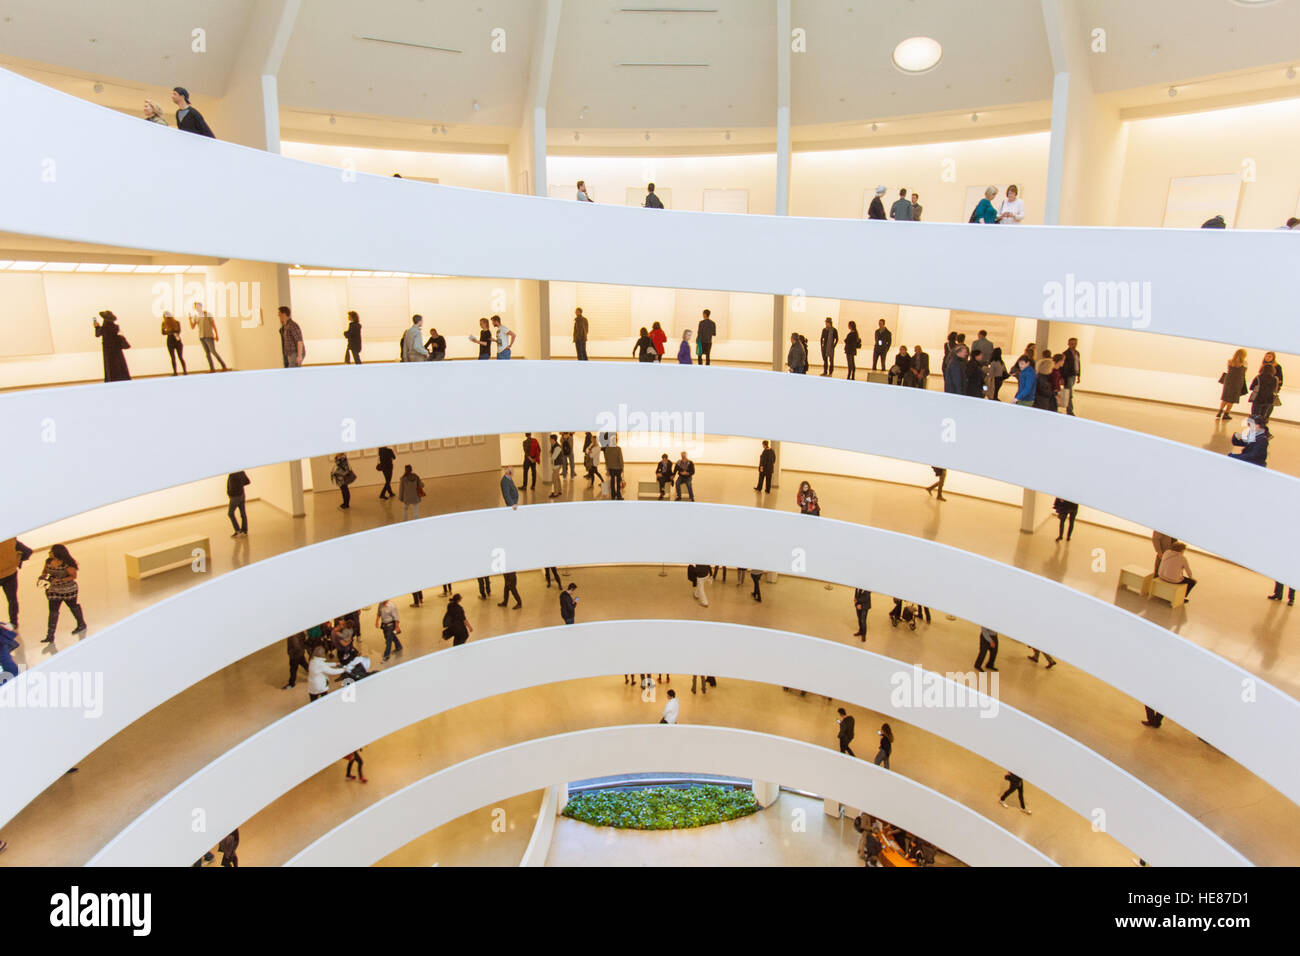 The Spiral Rotunda inside the Guggenheim Museum, Fifth Avenue, Manhattan, New York City, United States of America. Stock Photo